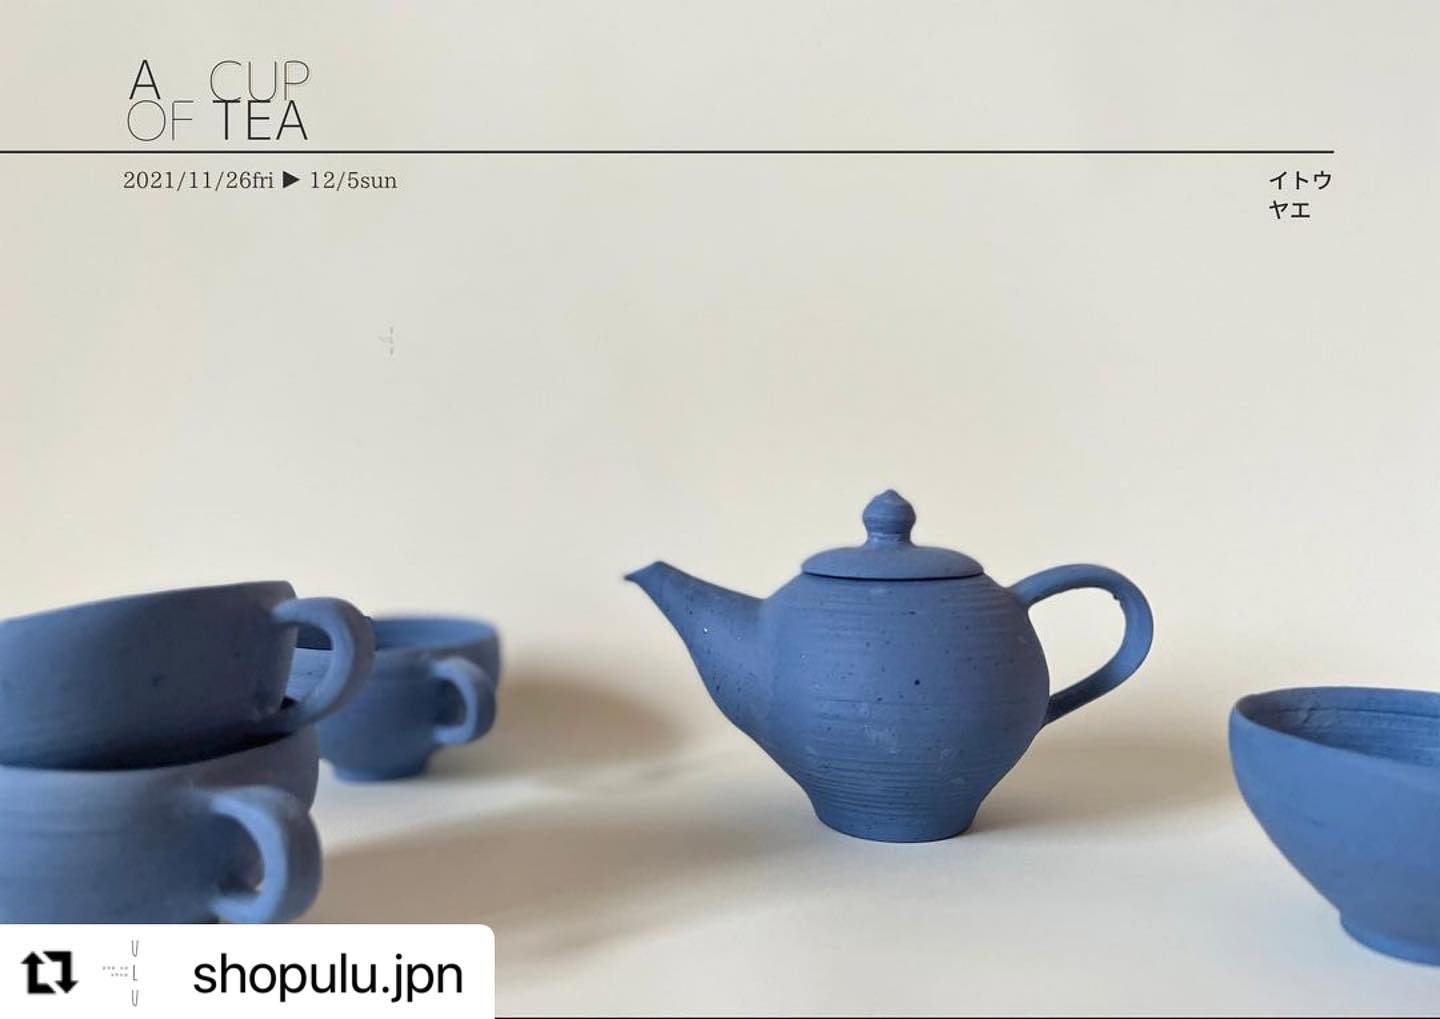 “A　CUP OF TEA”